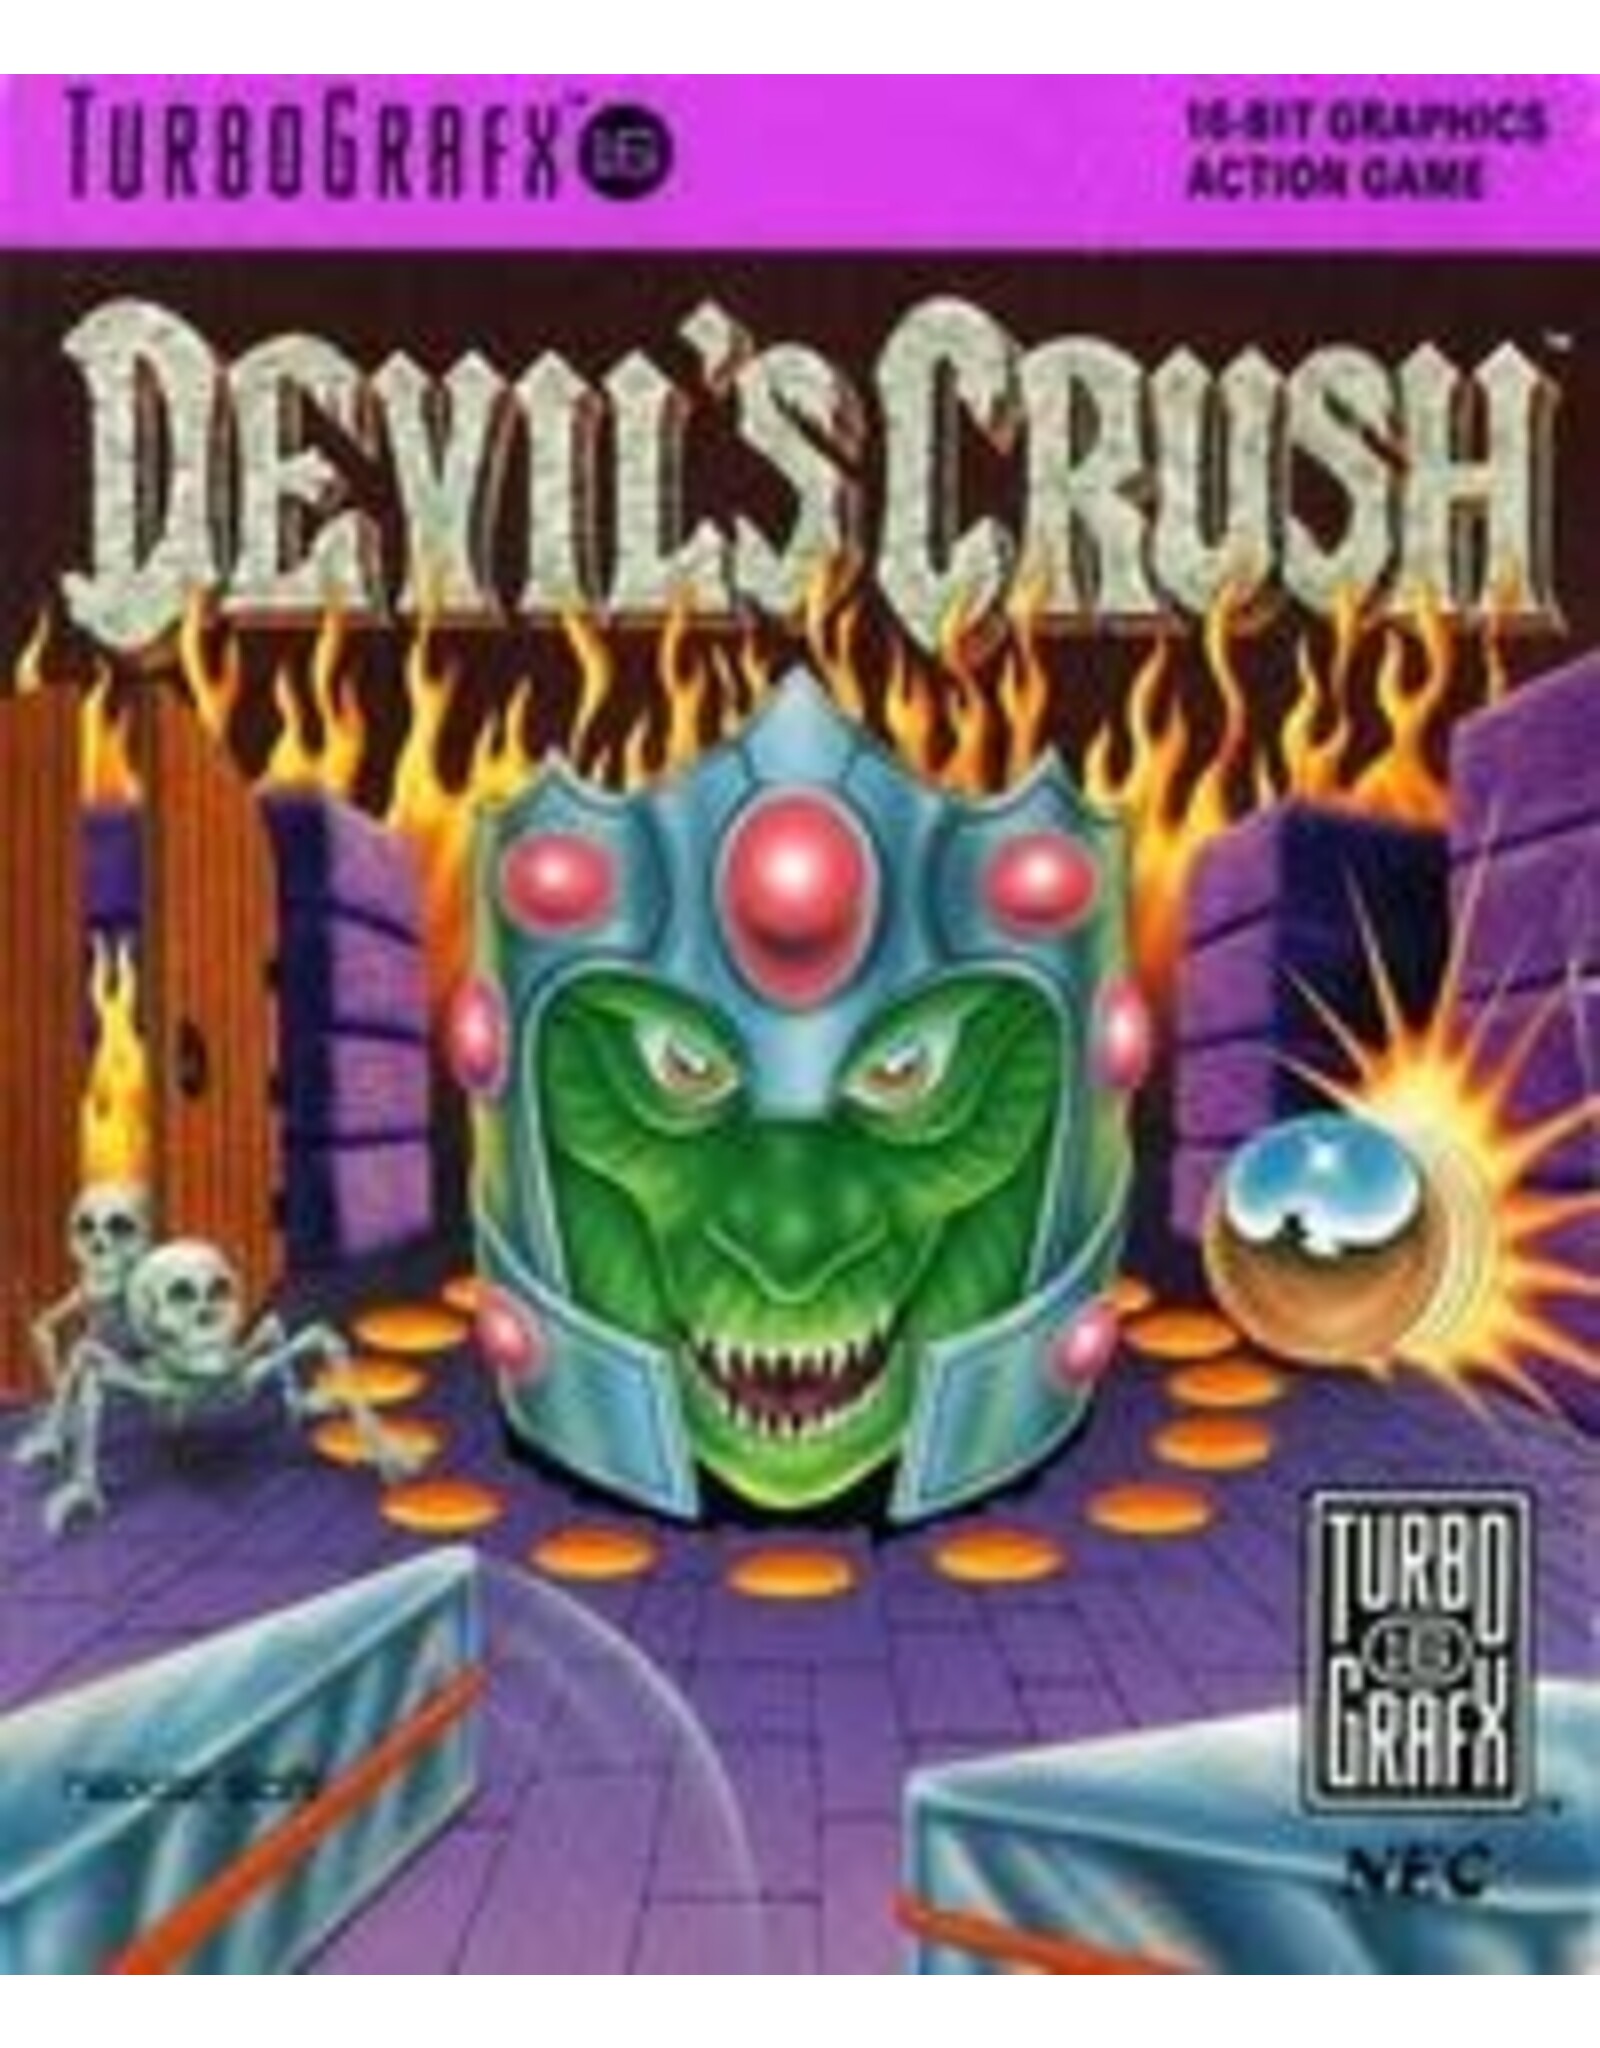 Turbografx 16 Devil's Crush (Jewel Case, Game and Manual)